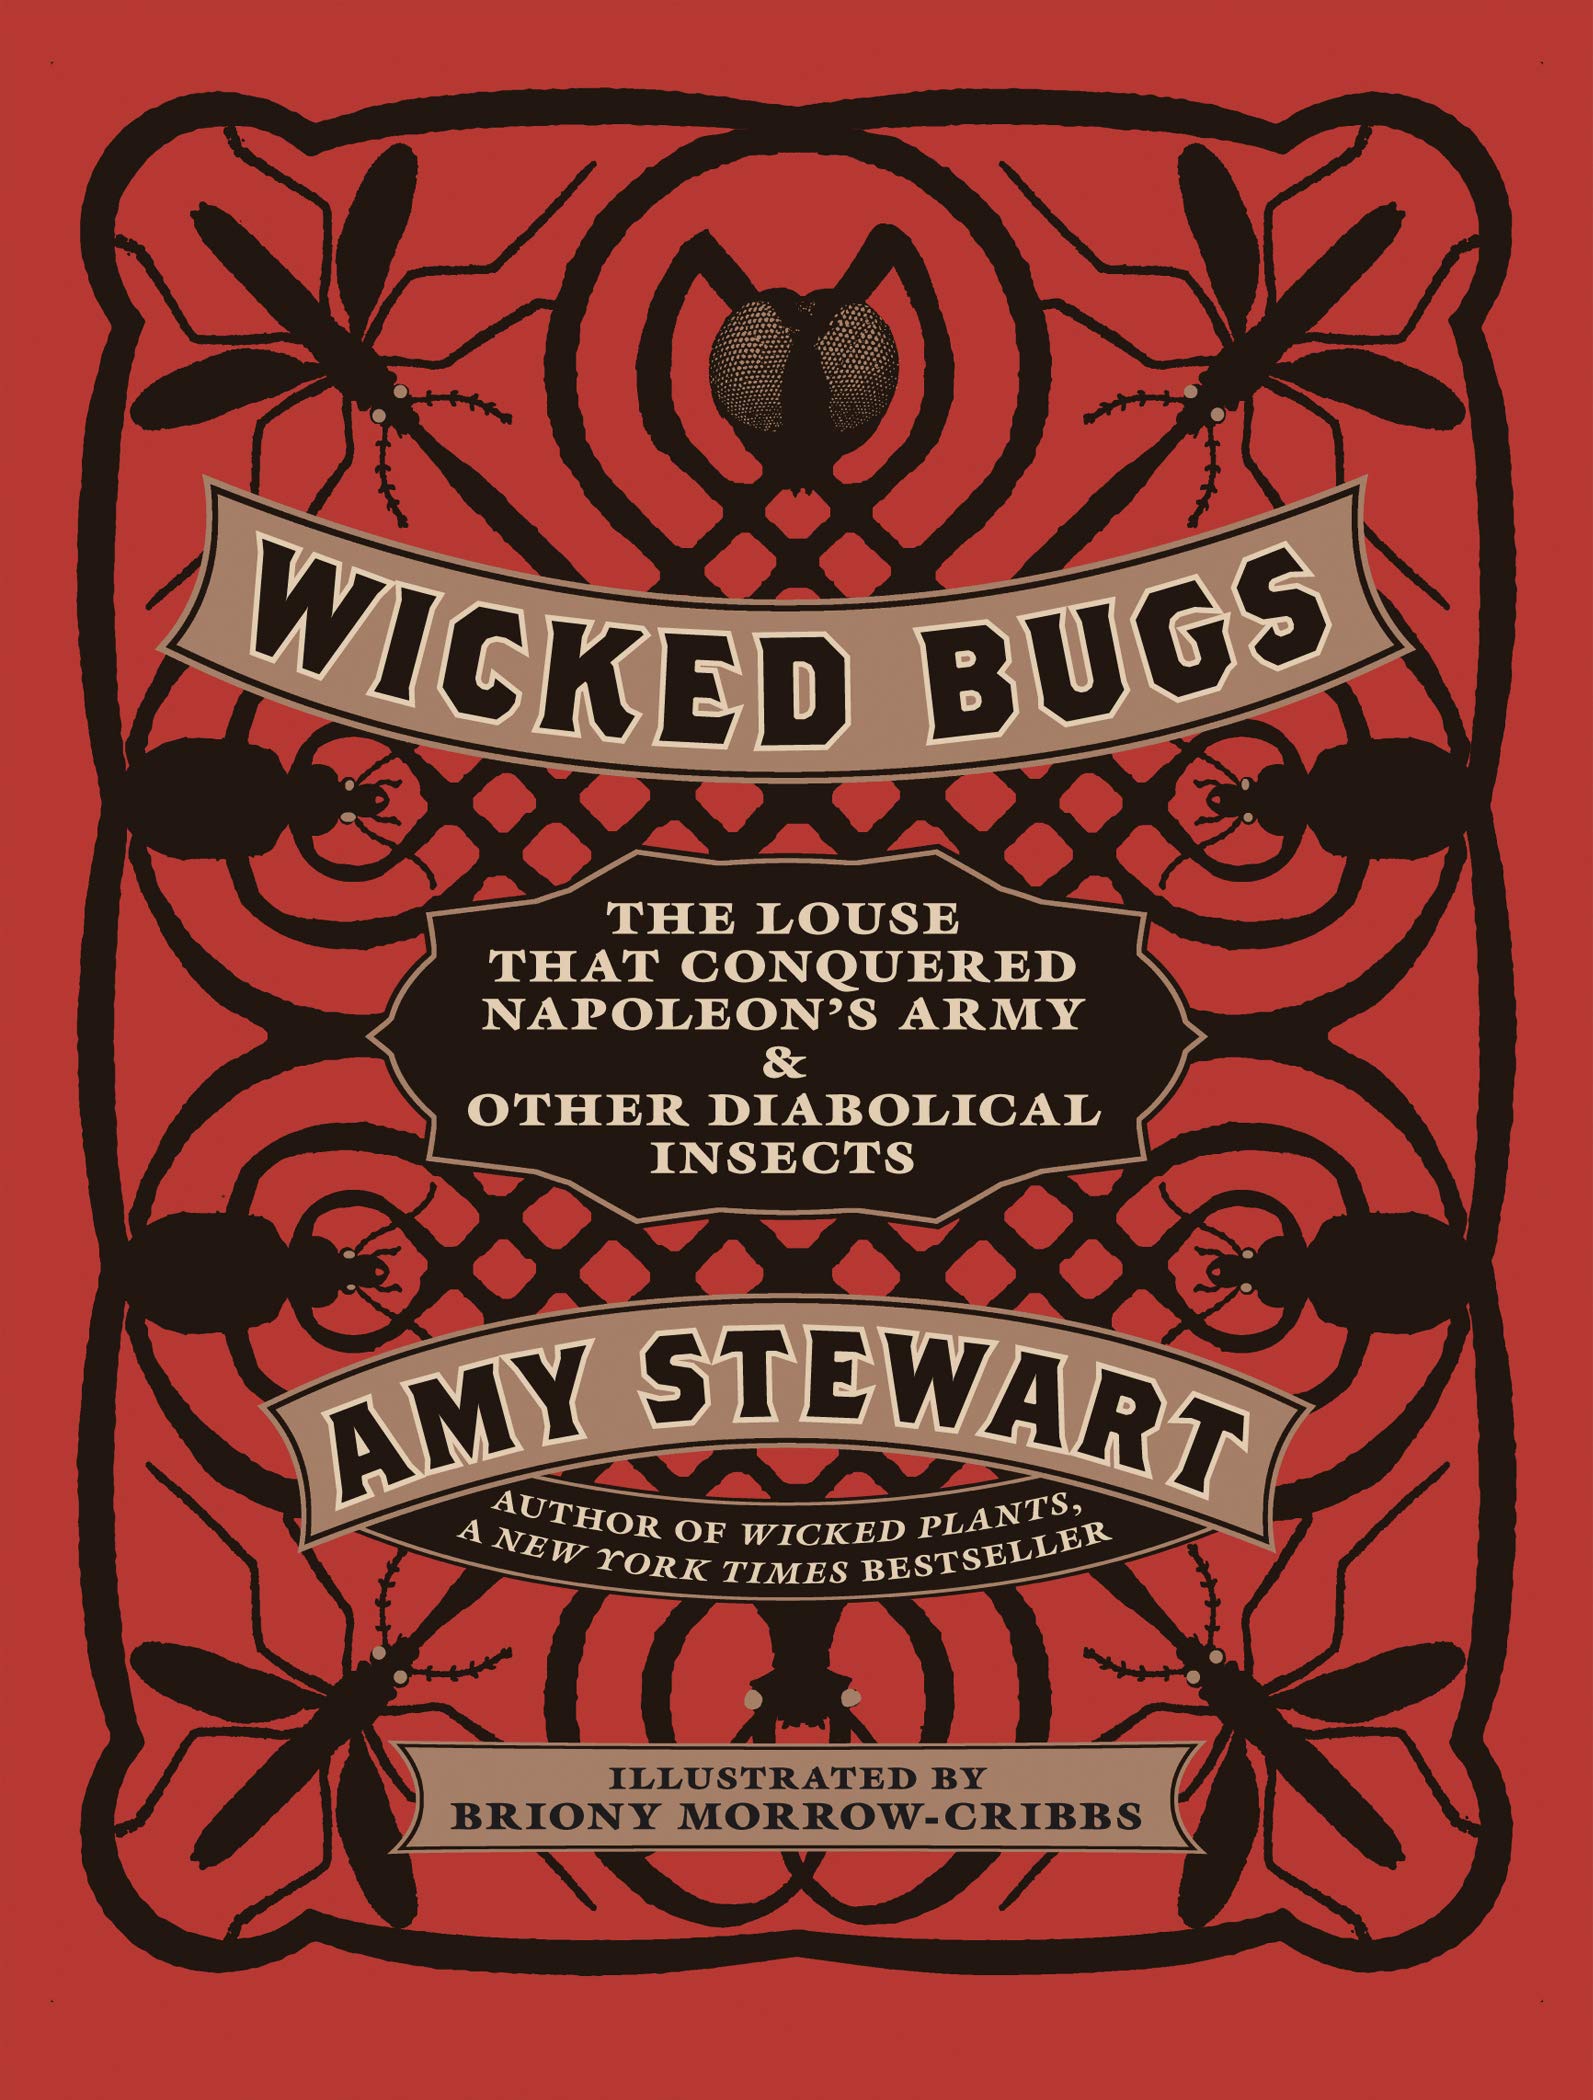 Wicked bugs by Amy Stewart